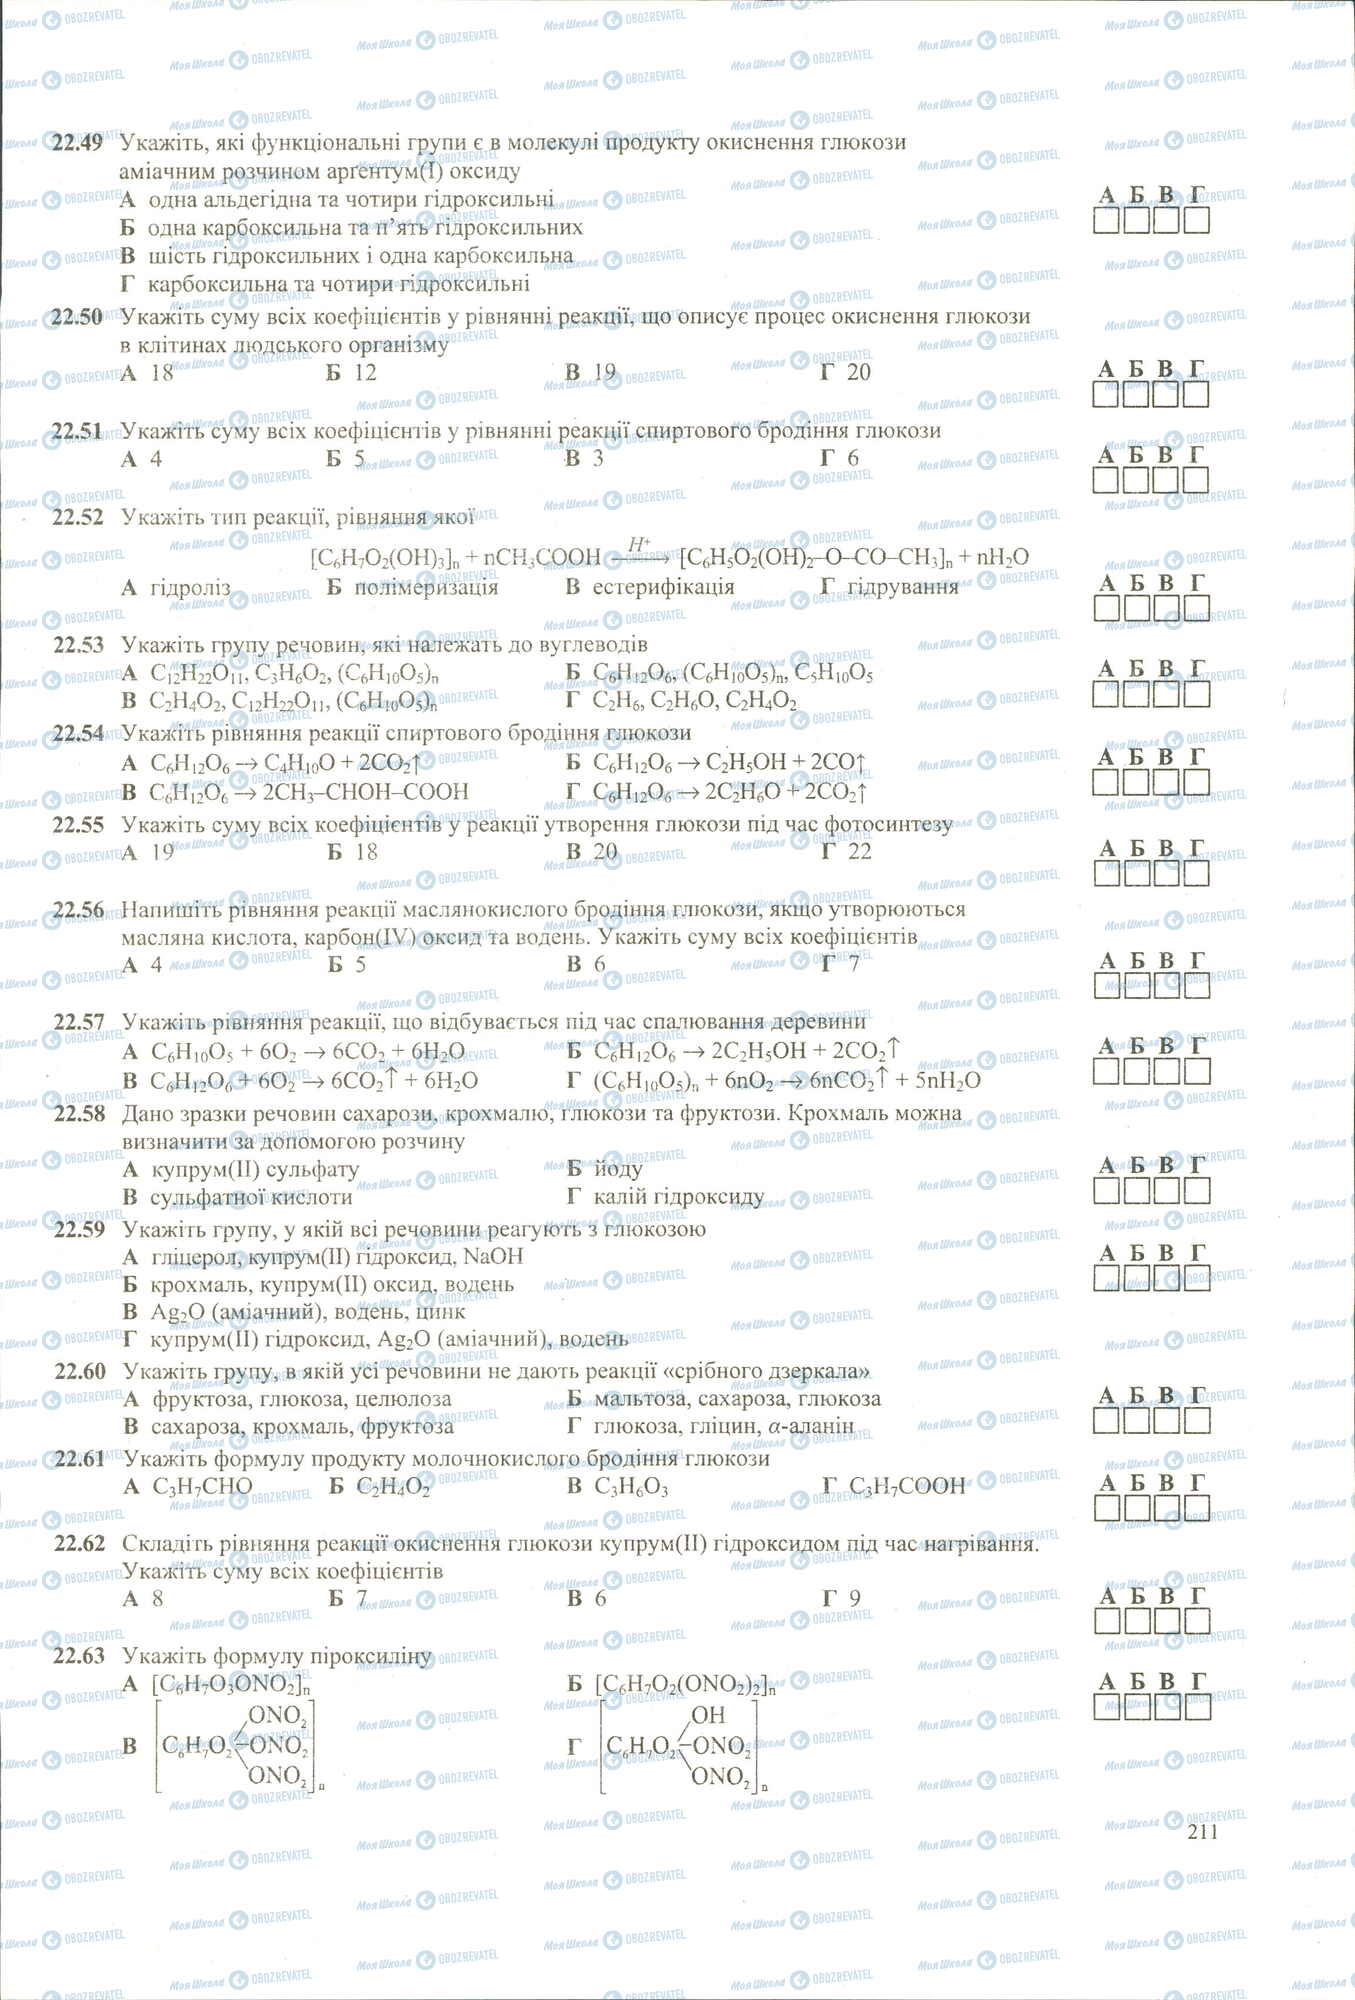 ЗНО Химия 11 класс страница 49-63